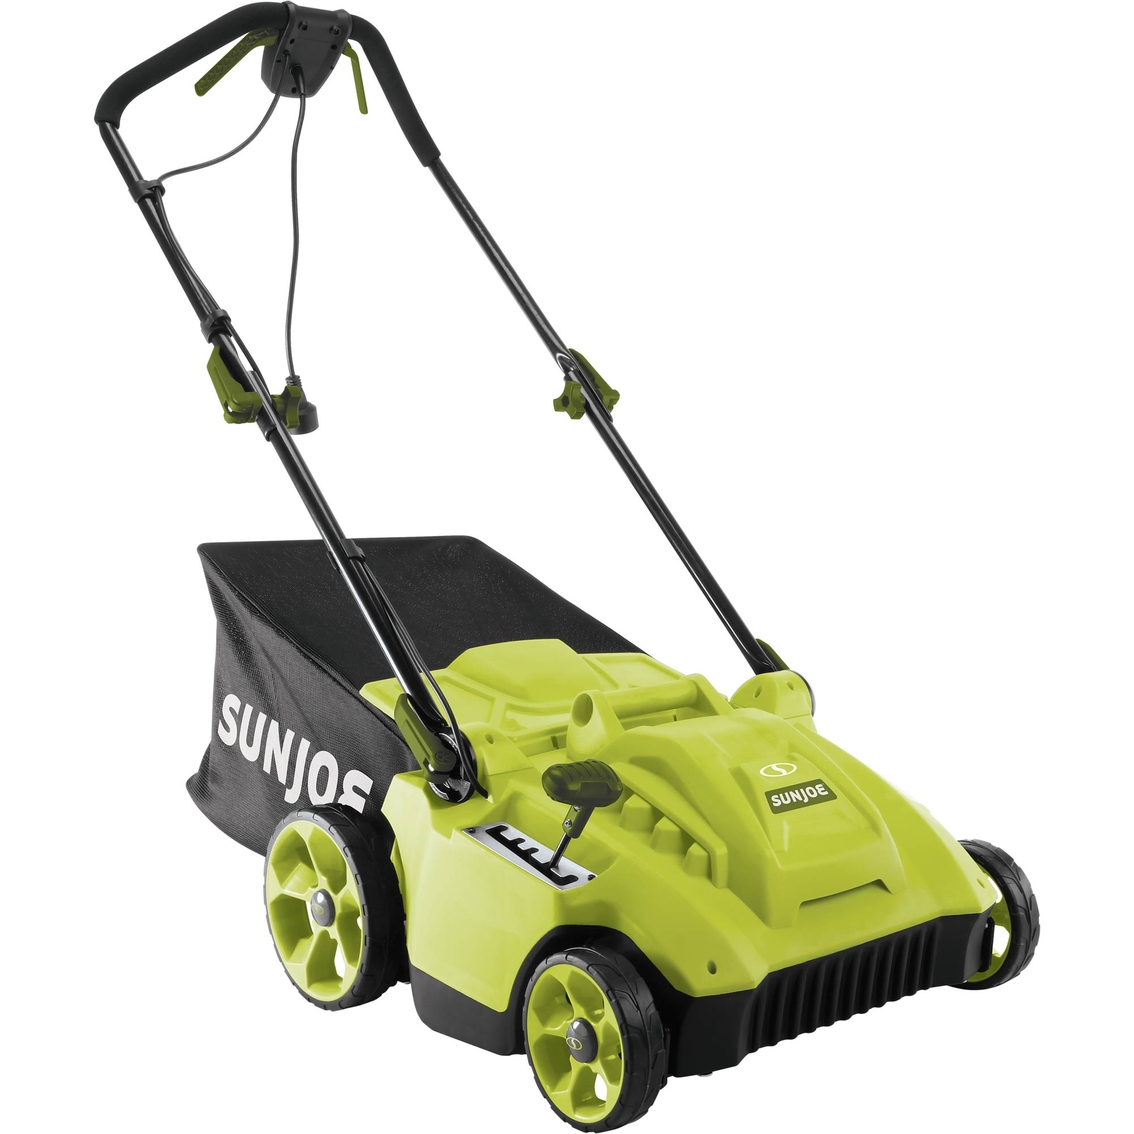 Sun Joe Mj506e 6.5 Amp Electric Reel Lawn Mower W/ Grass Catcher, Mowers, Patio, Garden & Garage